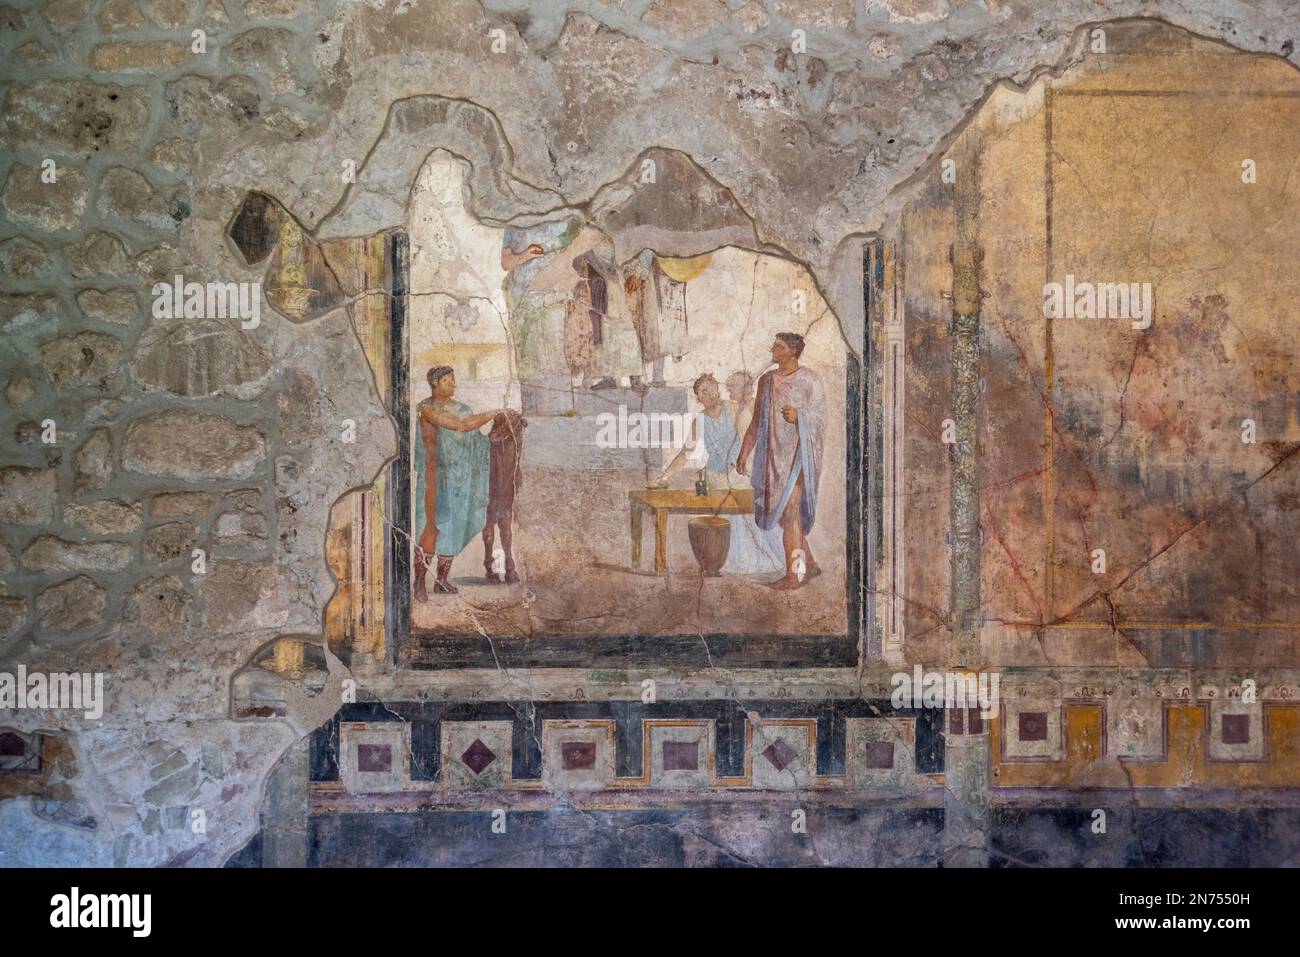 Pompeii, Italy, Scenic painting of Roman inhabitants in a fresco of an ancient Roman villa in Pompeii, Southern Italy Stock Photo